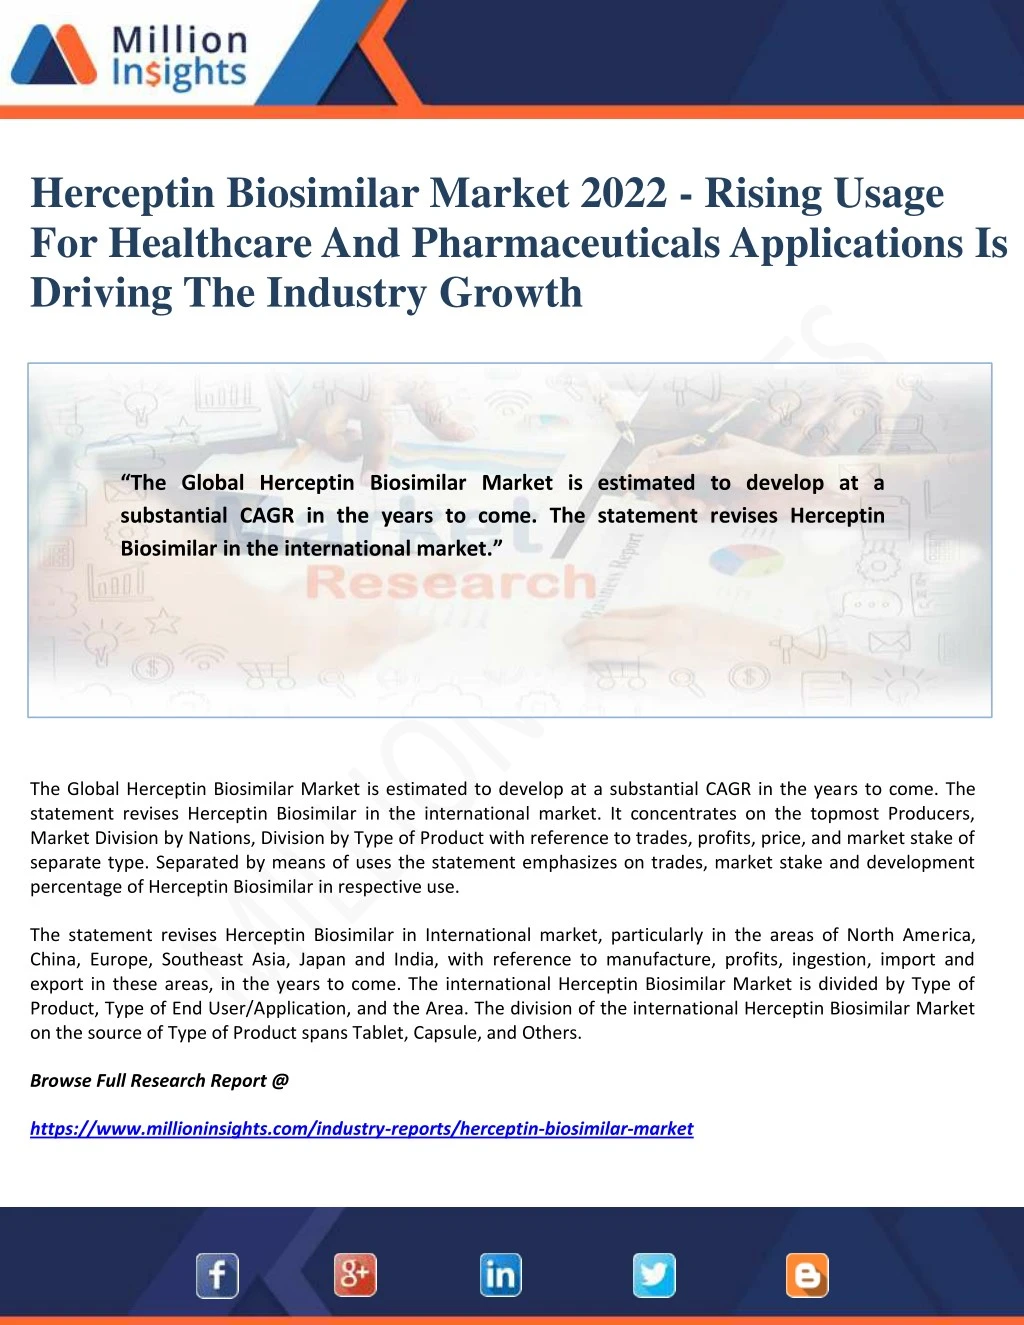 herceptin biosimilar market 2022 rising usage